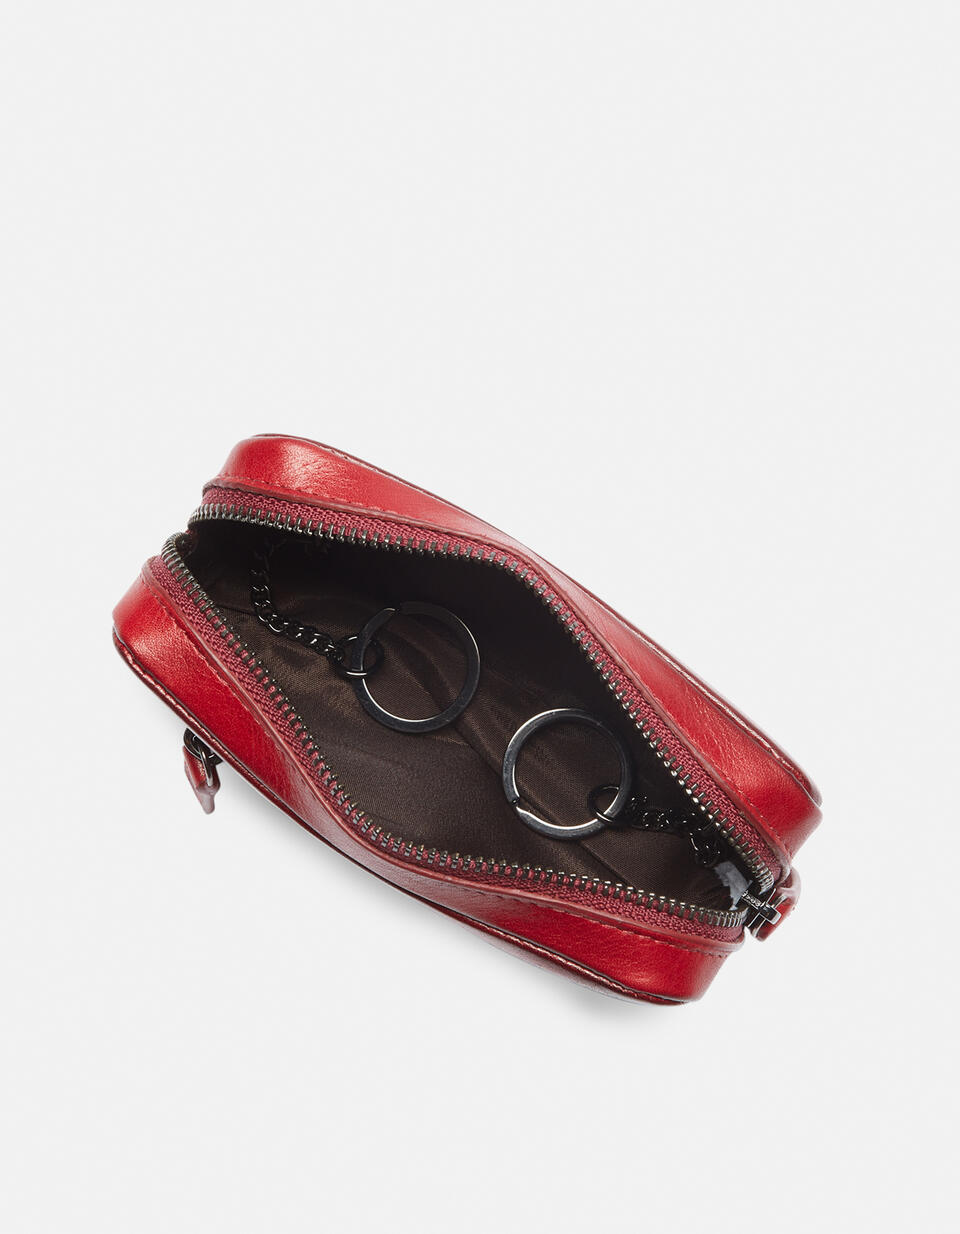 Key pouch  - Key Holders - Men's Accessories - Accessories - Cuoieria Fiorentina